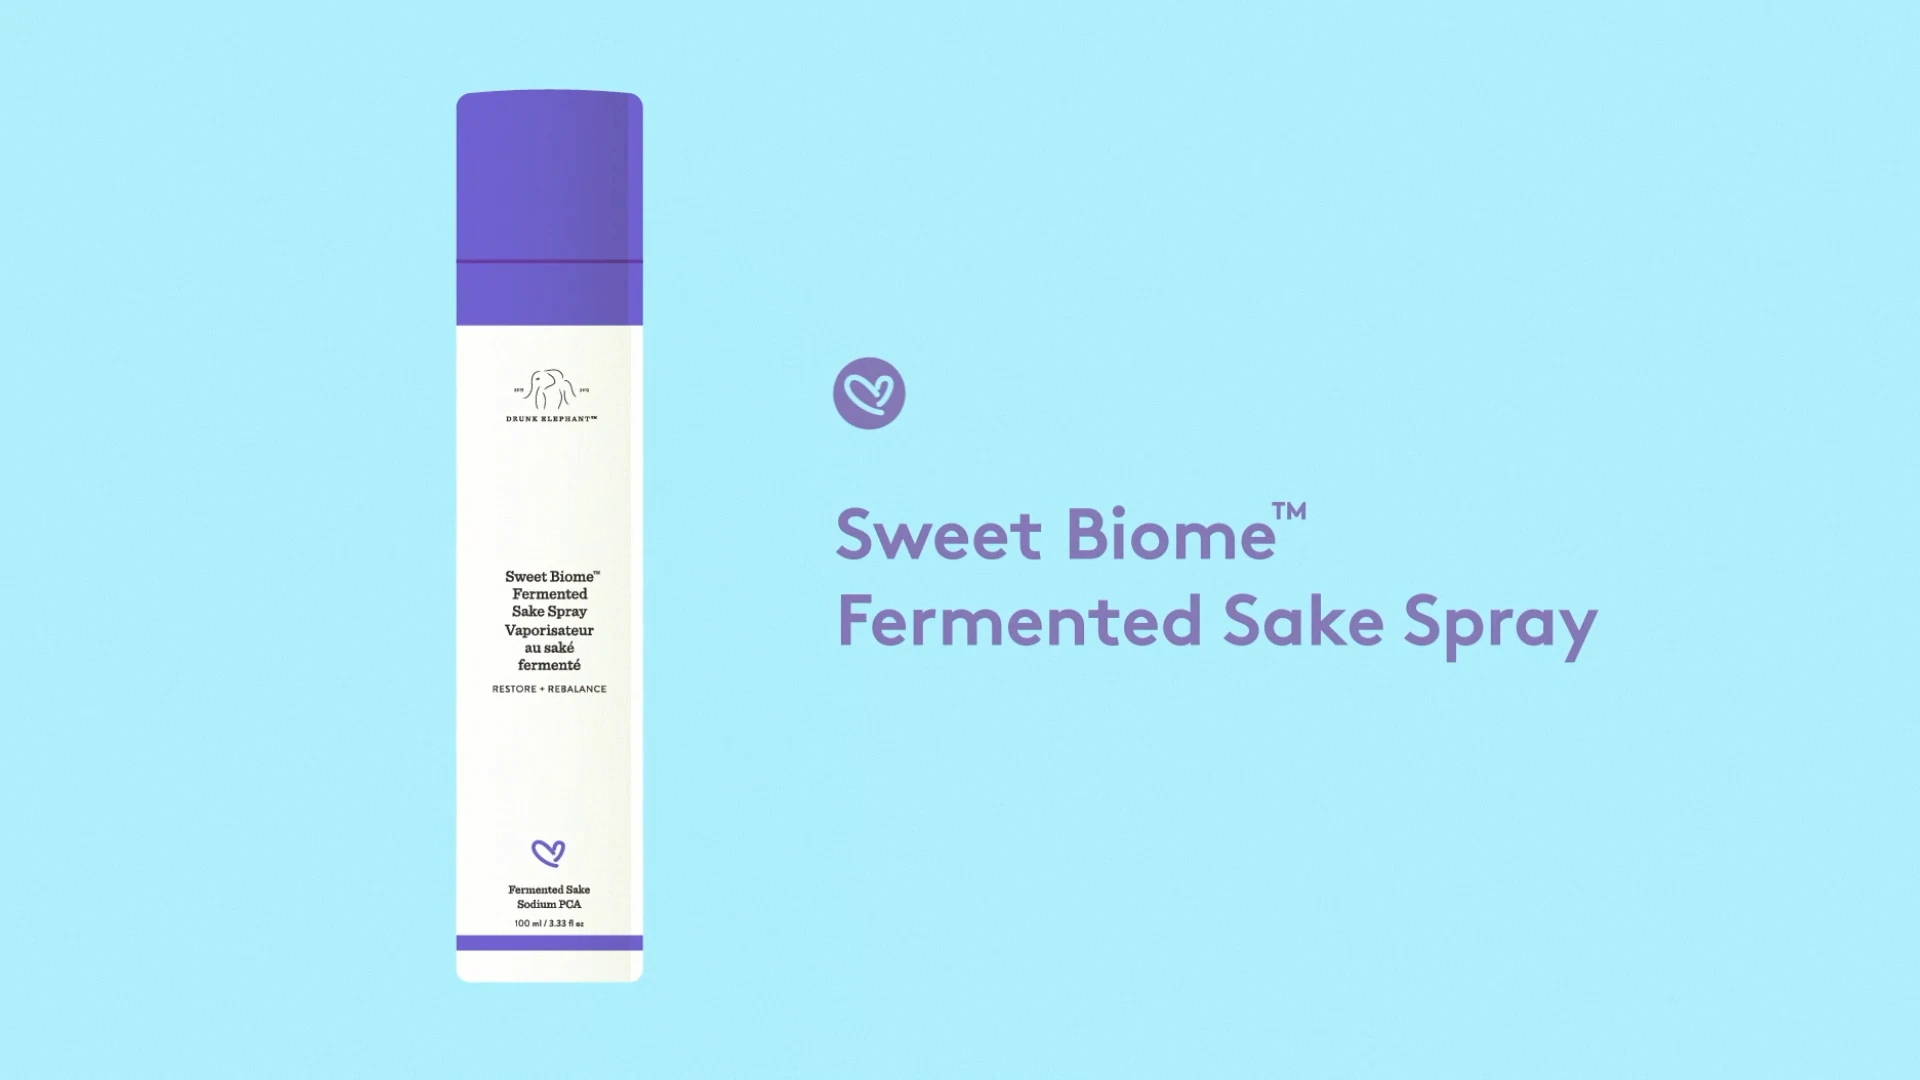 Video introducing Sweet Biome Fermented Sake Spray